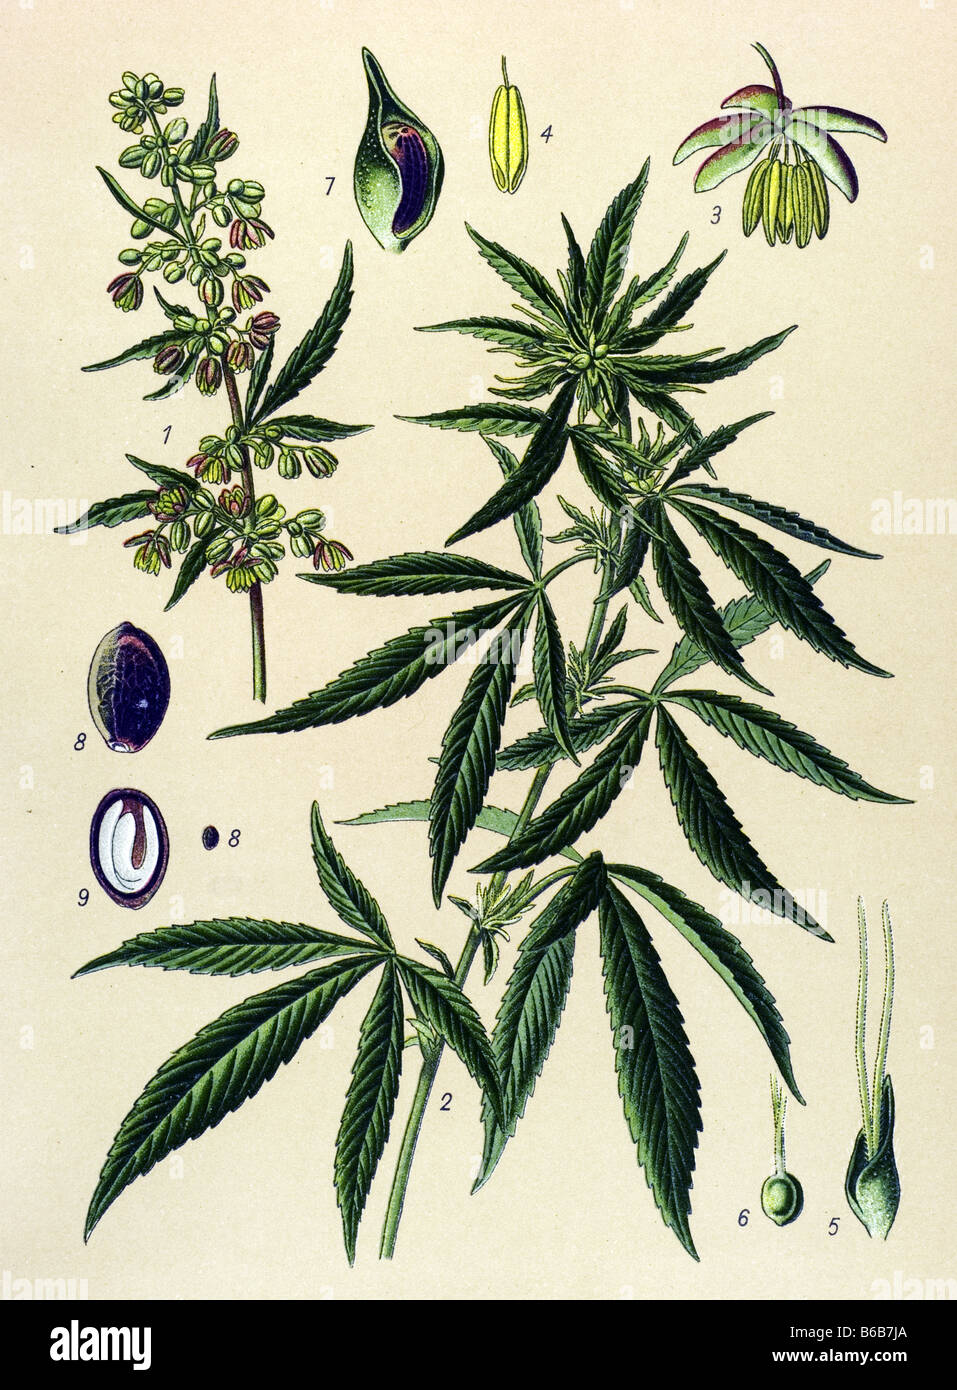 Cannabis sativa, poisonous plants illustrations Stock Photo